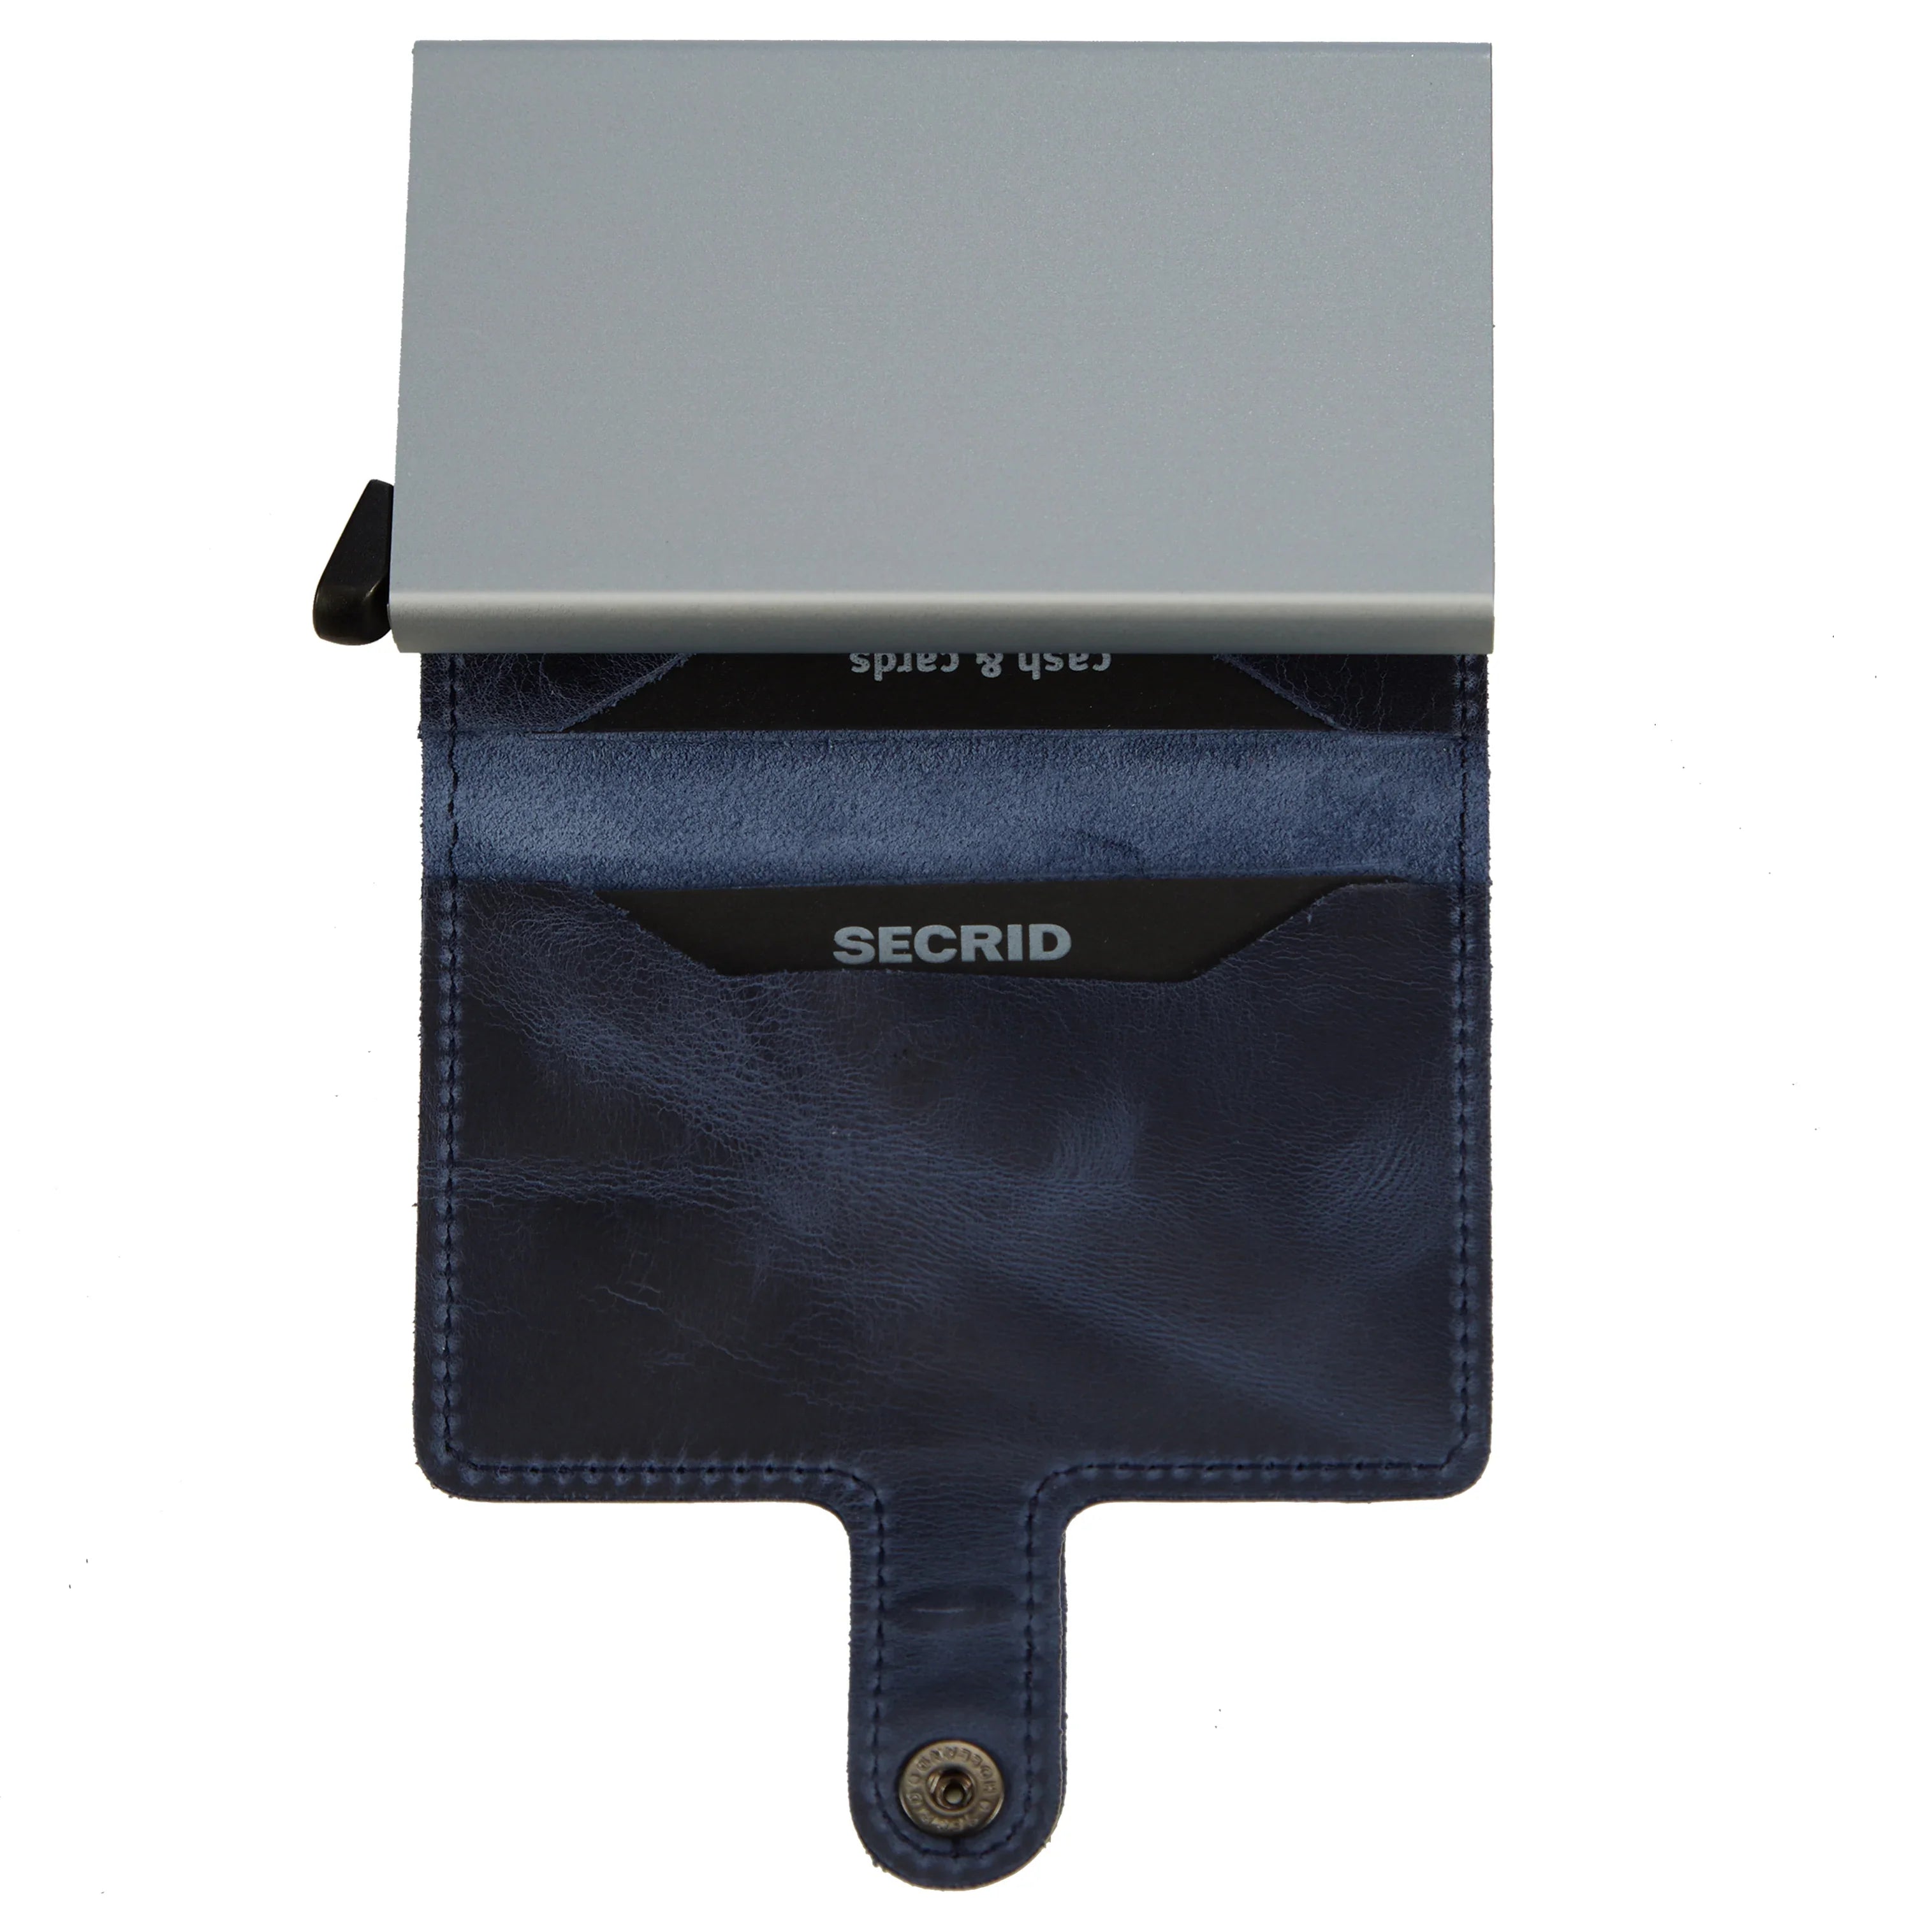 Secrid Wallets Miniwallet Vintage 10 cm - gray-black